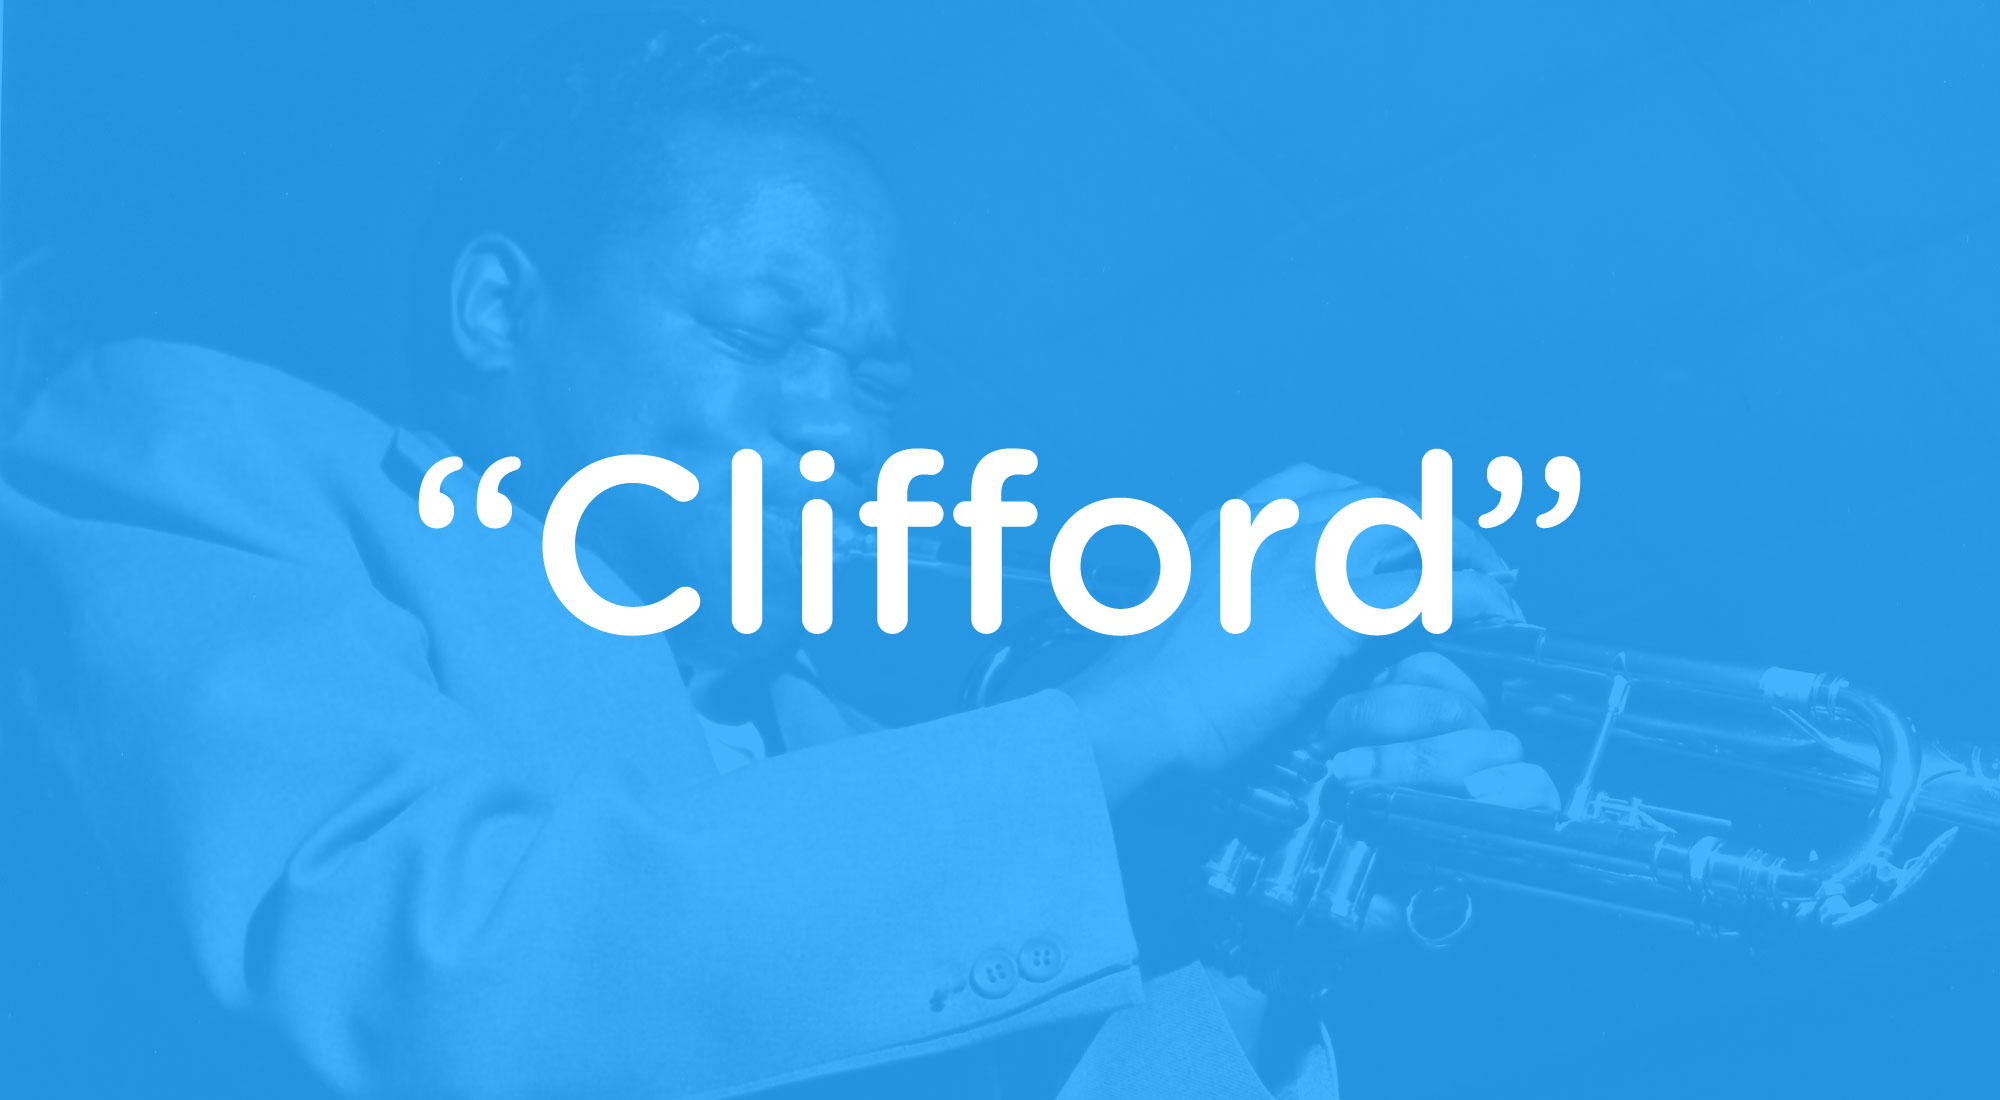 WordPress 4.4, “Clifford”, released